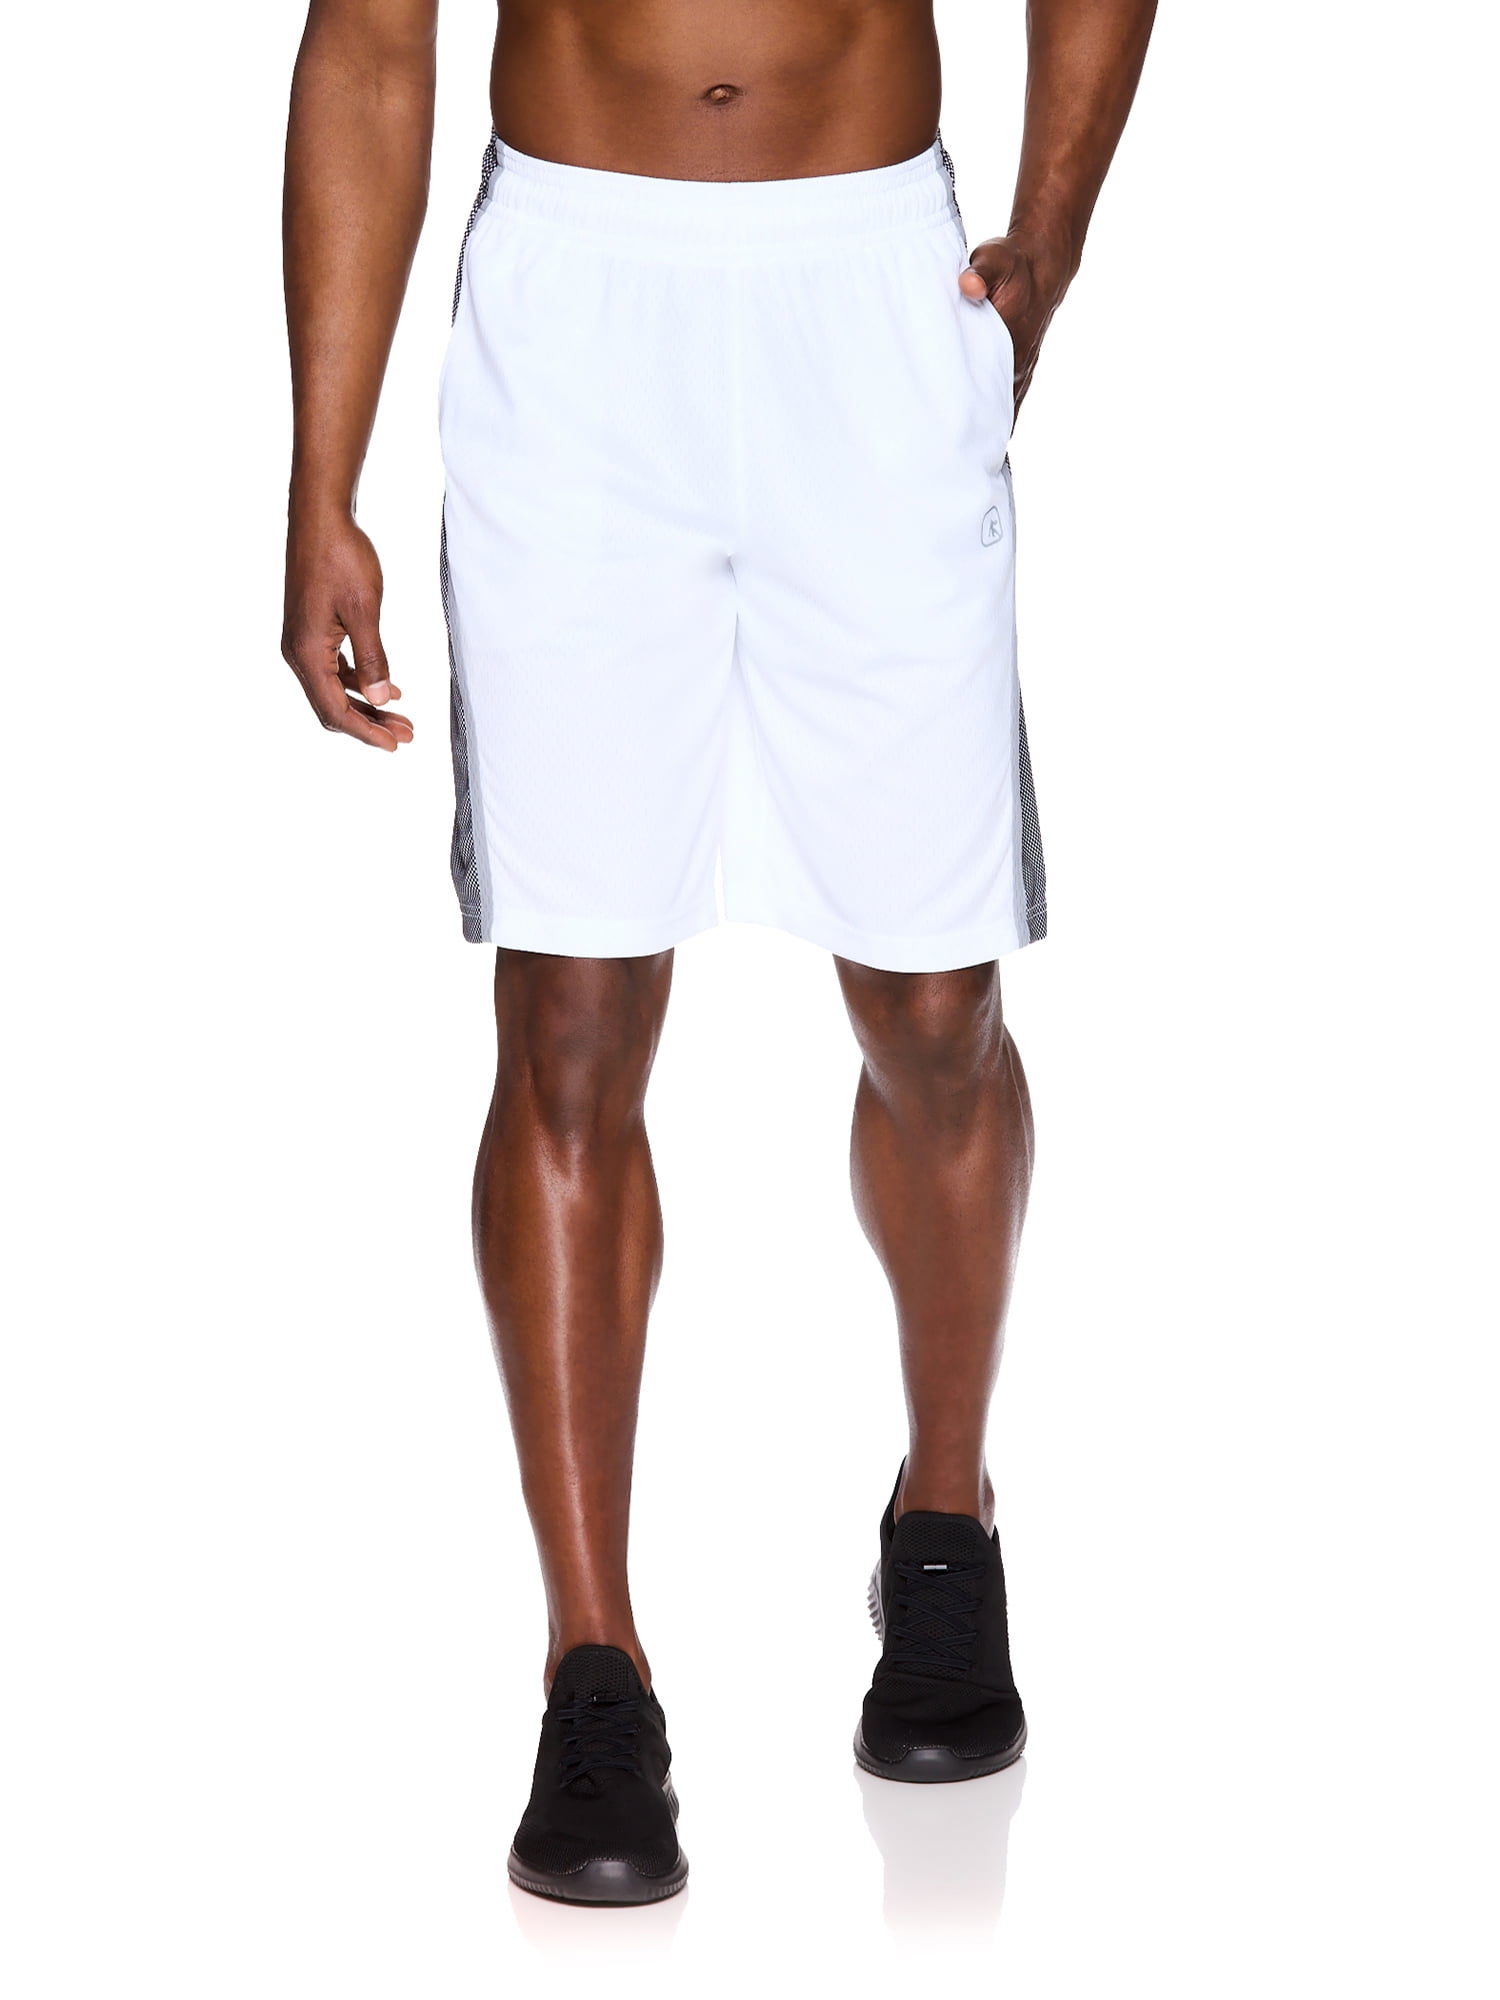 BALEAF Men's Basketball Shorts Long with Zipper Pockets Quick Dry Workout Training Drawstrings 11 